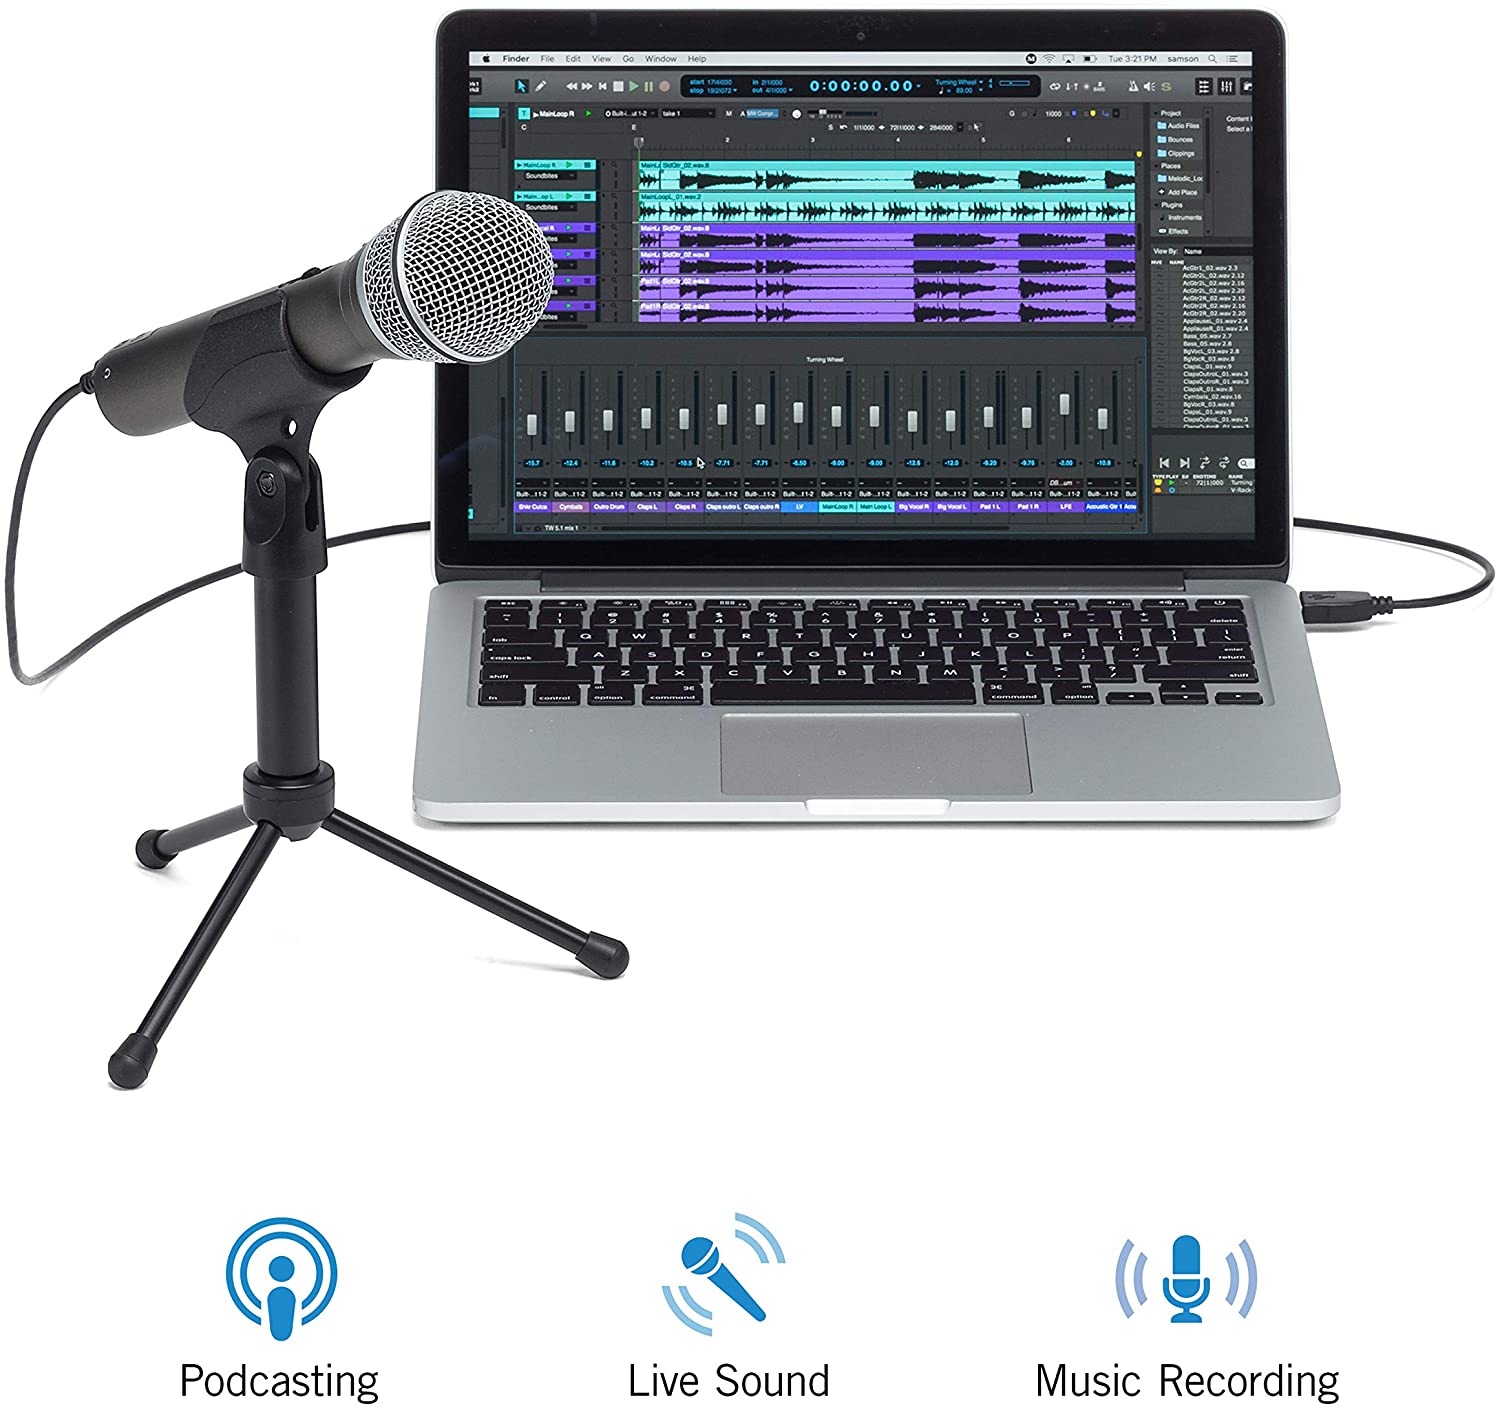 Buy Samson Q2U Broadcast Microphone Kit With Microphone Boom Arm and  Headphones